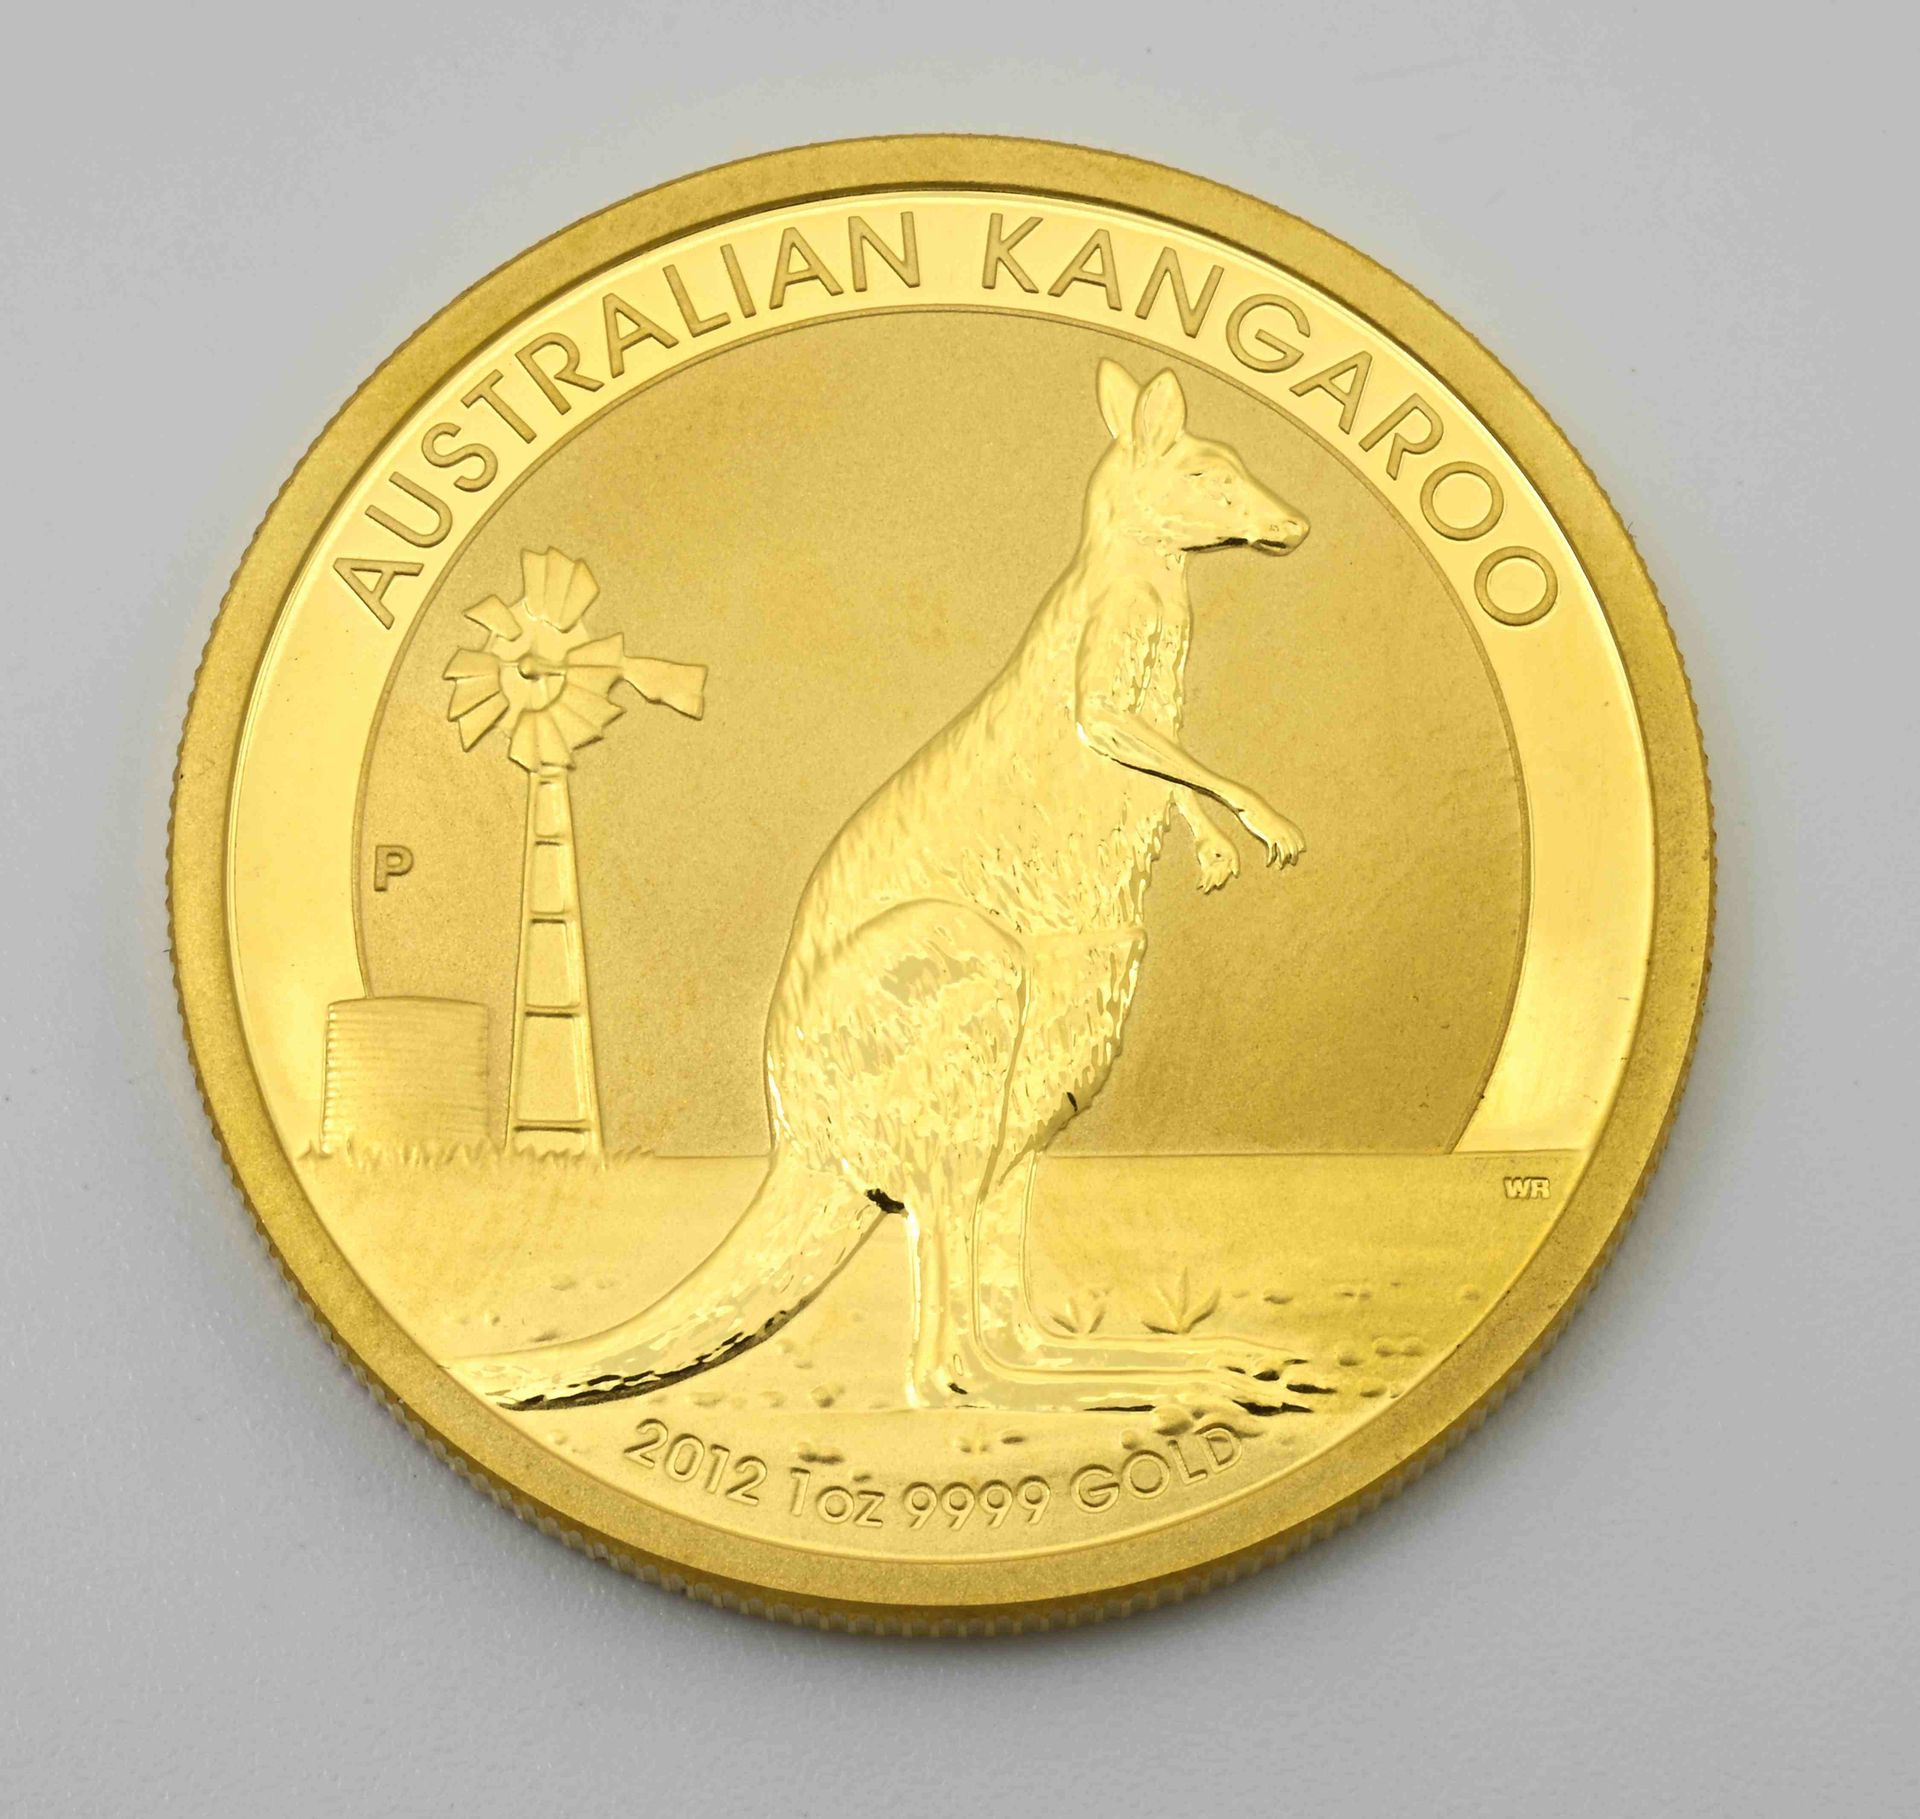 Null 澳大利亚的金块。珀斯澳大利亚100美元硬币，
一盎司9999纯金，年份2012。在单个胶囊的情况下。
状况非常好。PN : 31,06 g。 	
MA&hellip;